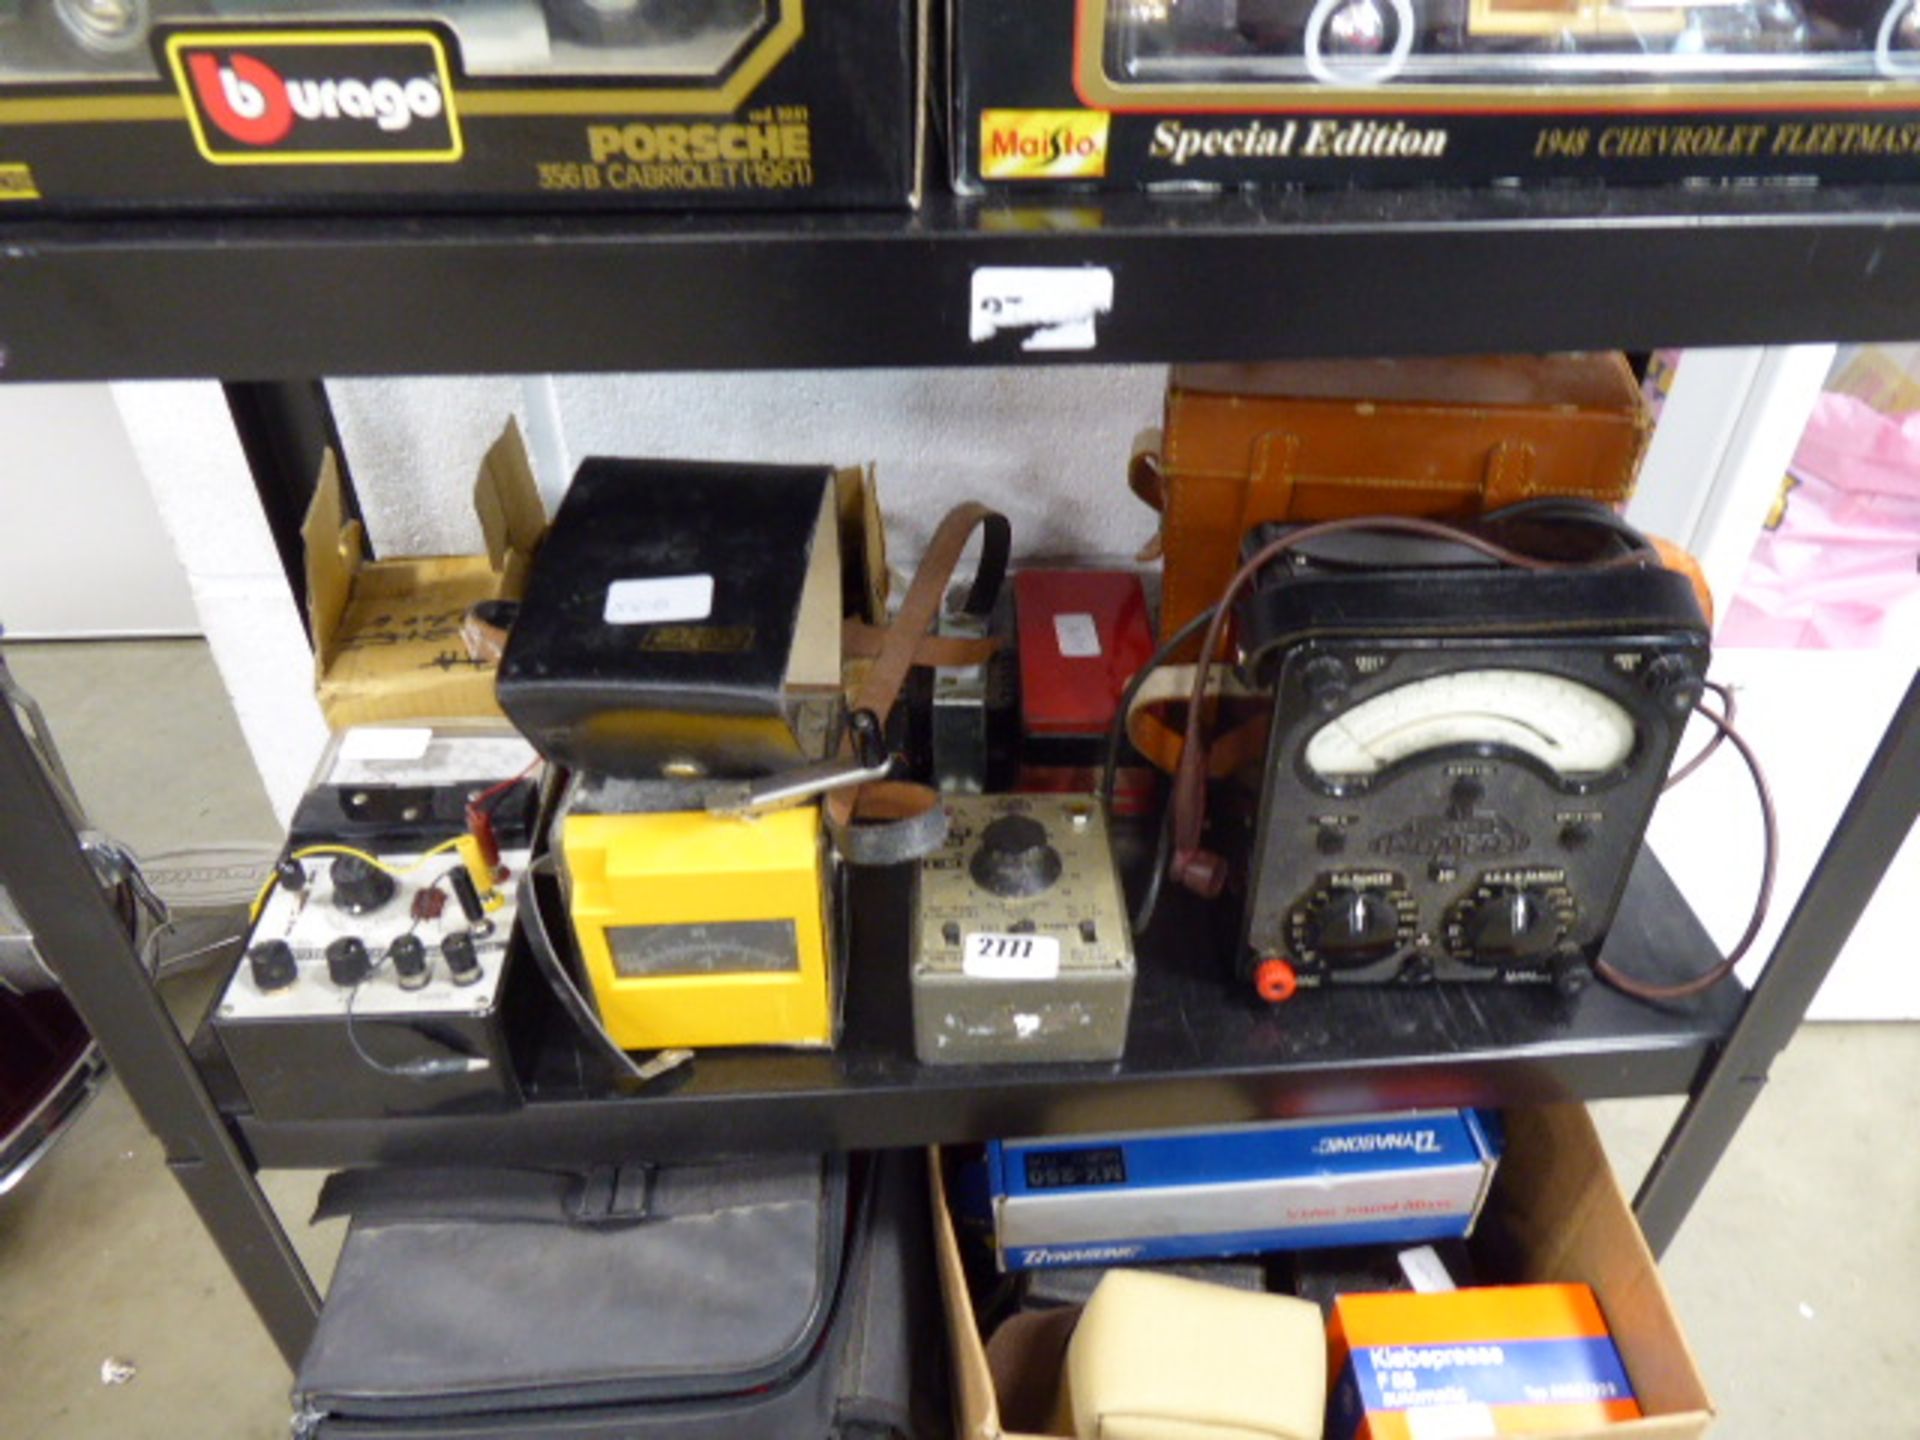 Shelf of assorted electrical testing equipment